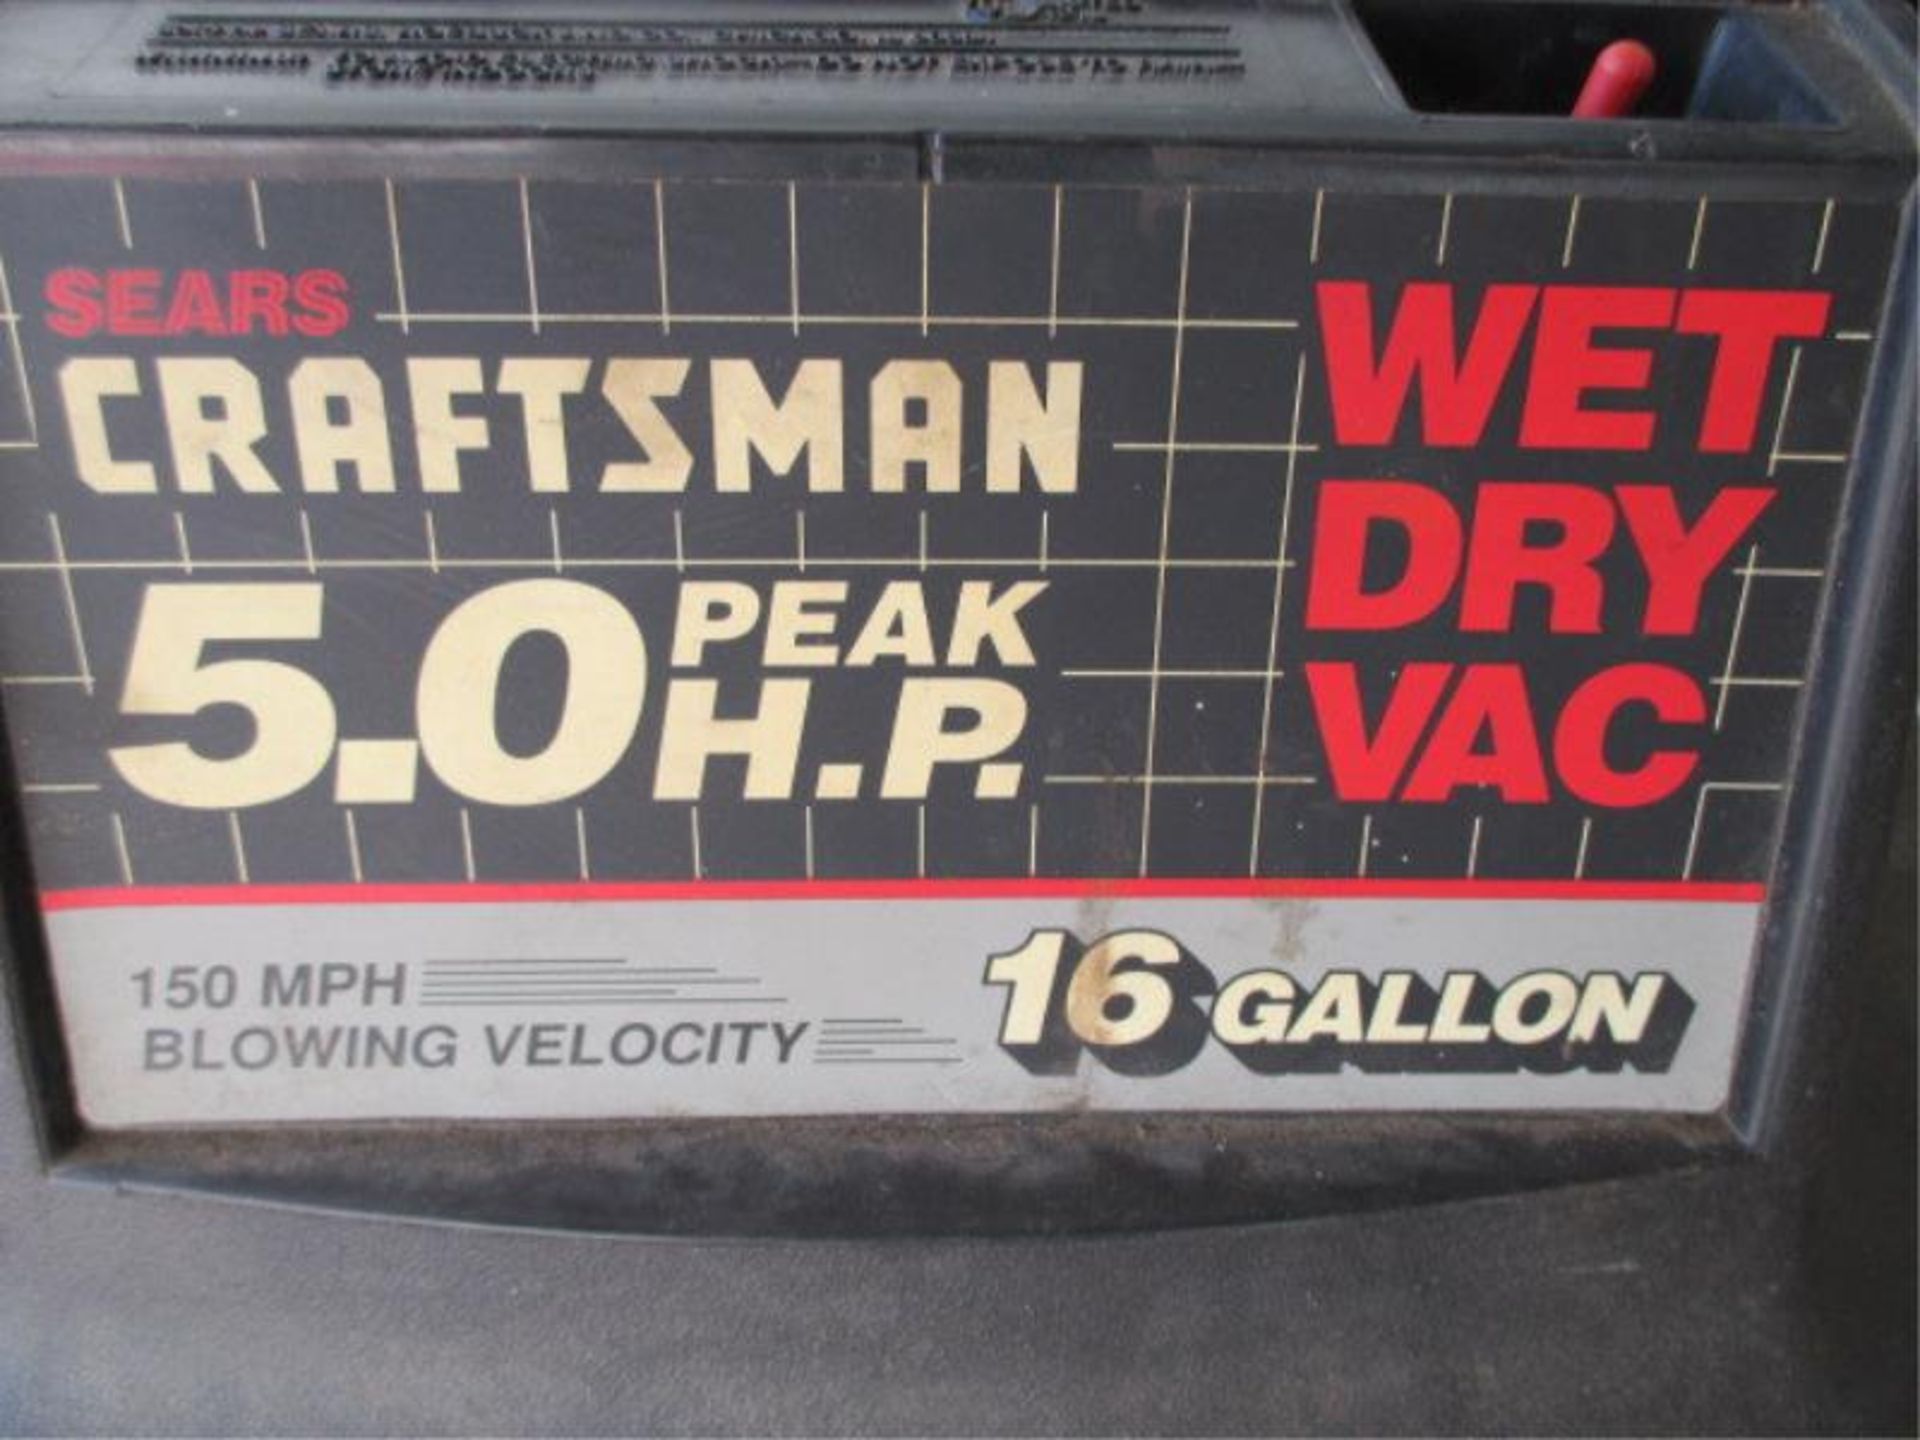 Crafsman Wet / Dry Vac, 18 Gallon, 5.0 Peak HP, 150 Blower MPH, Black, No Hose 150 Blower MPH, - Image 2 of 11